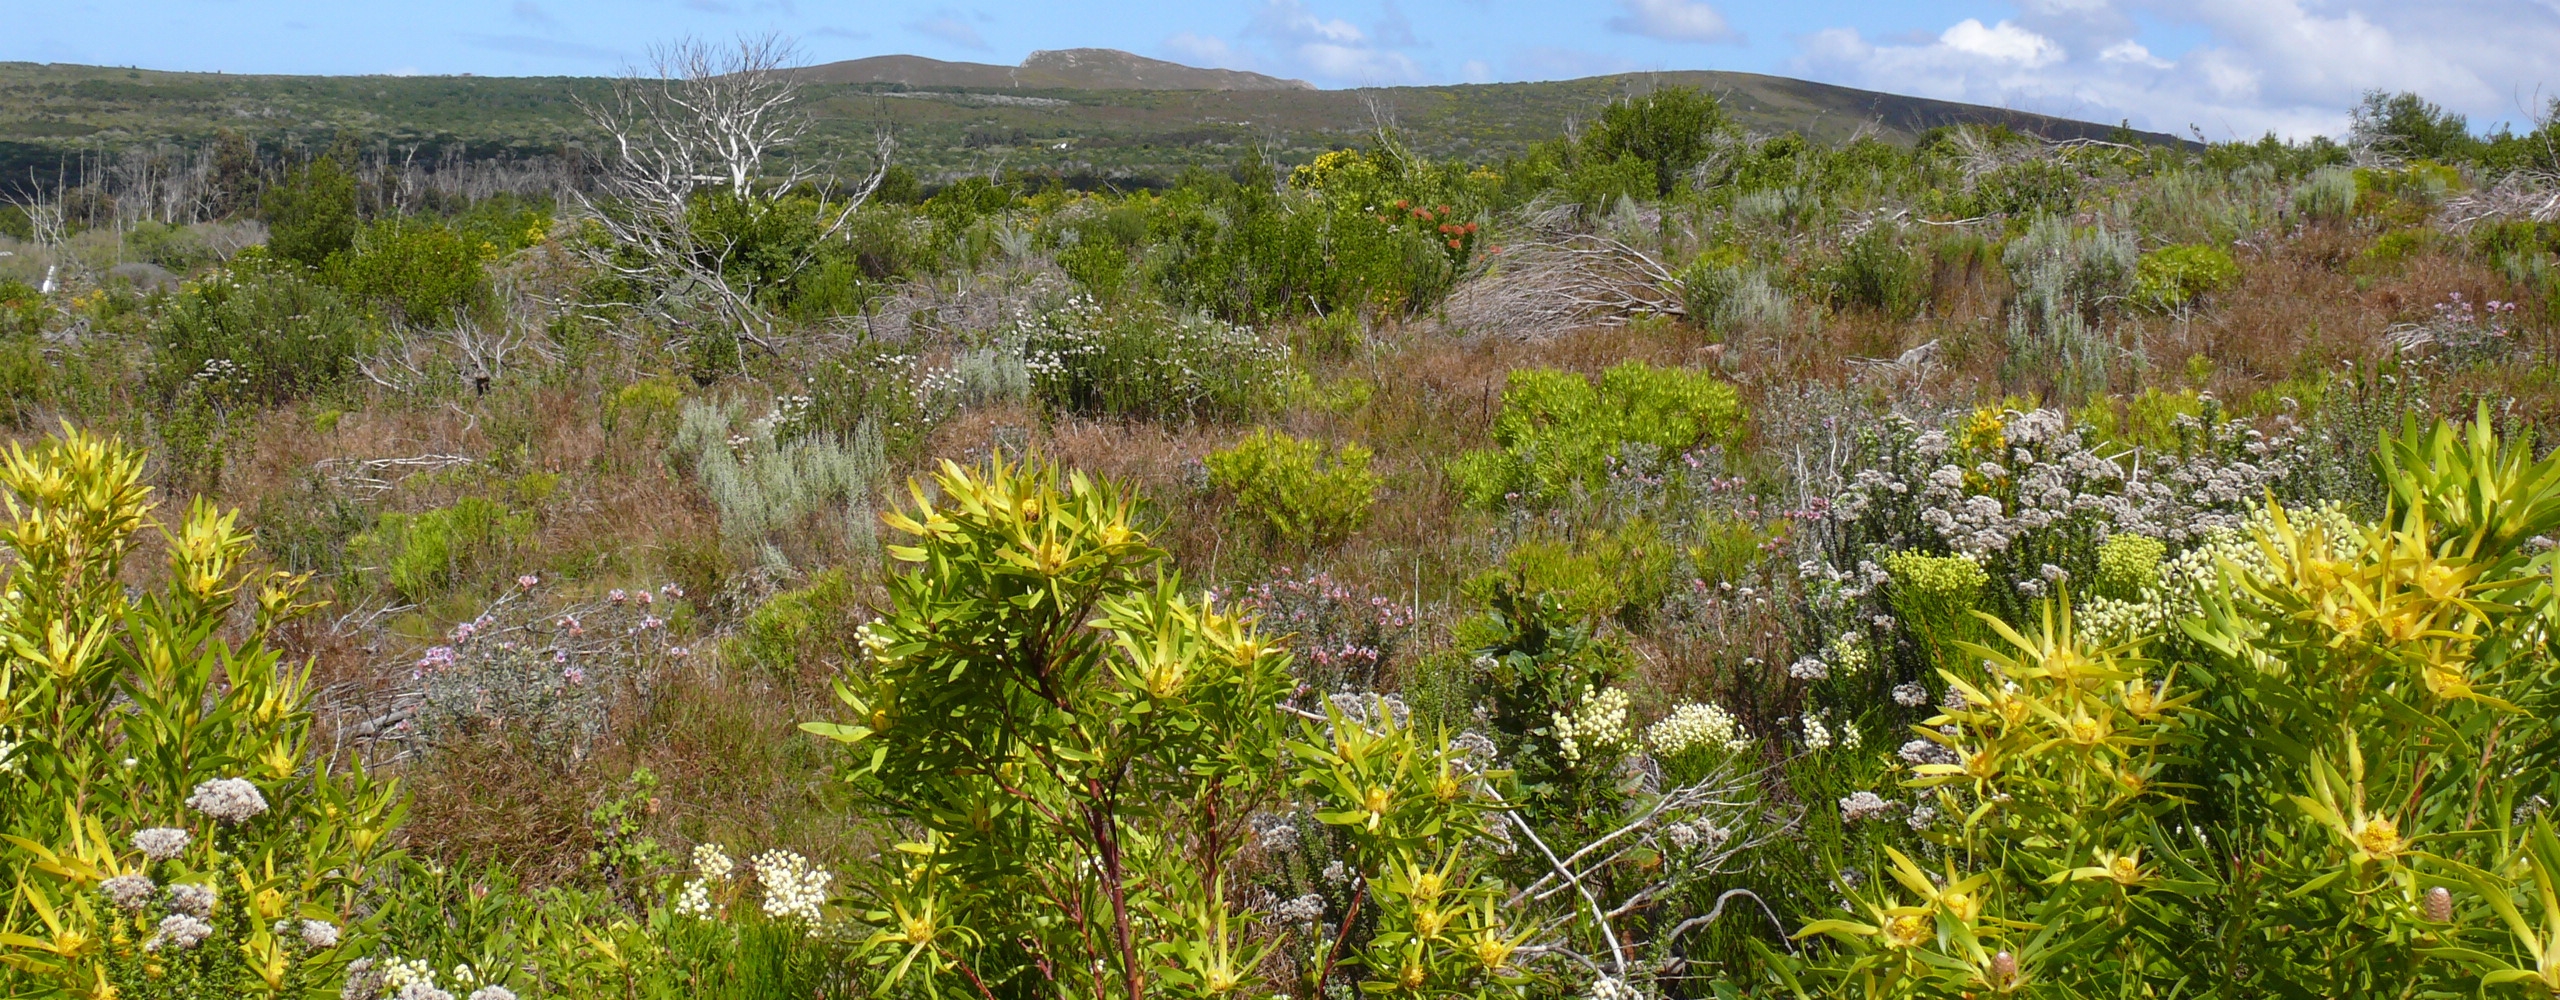 Fynbos landscape